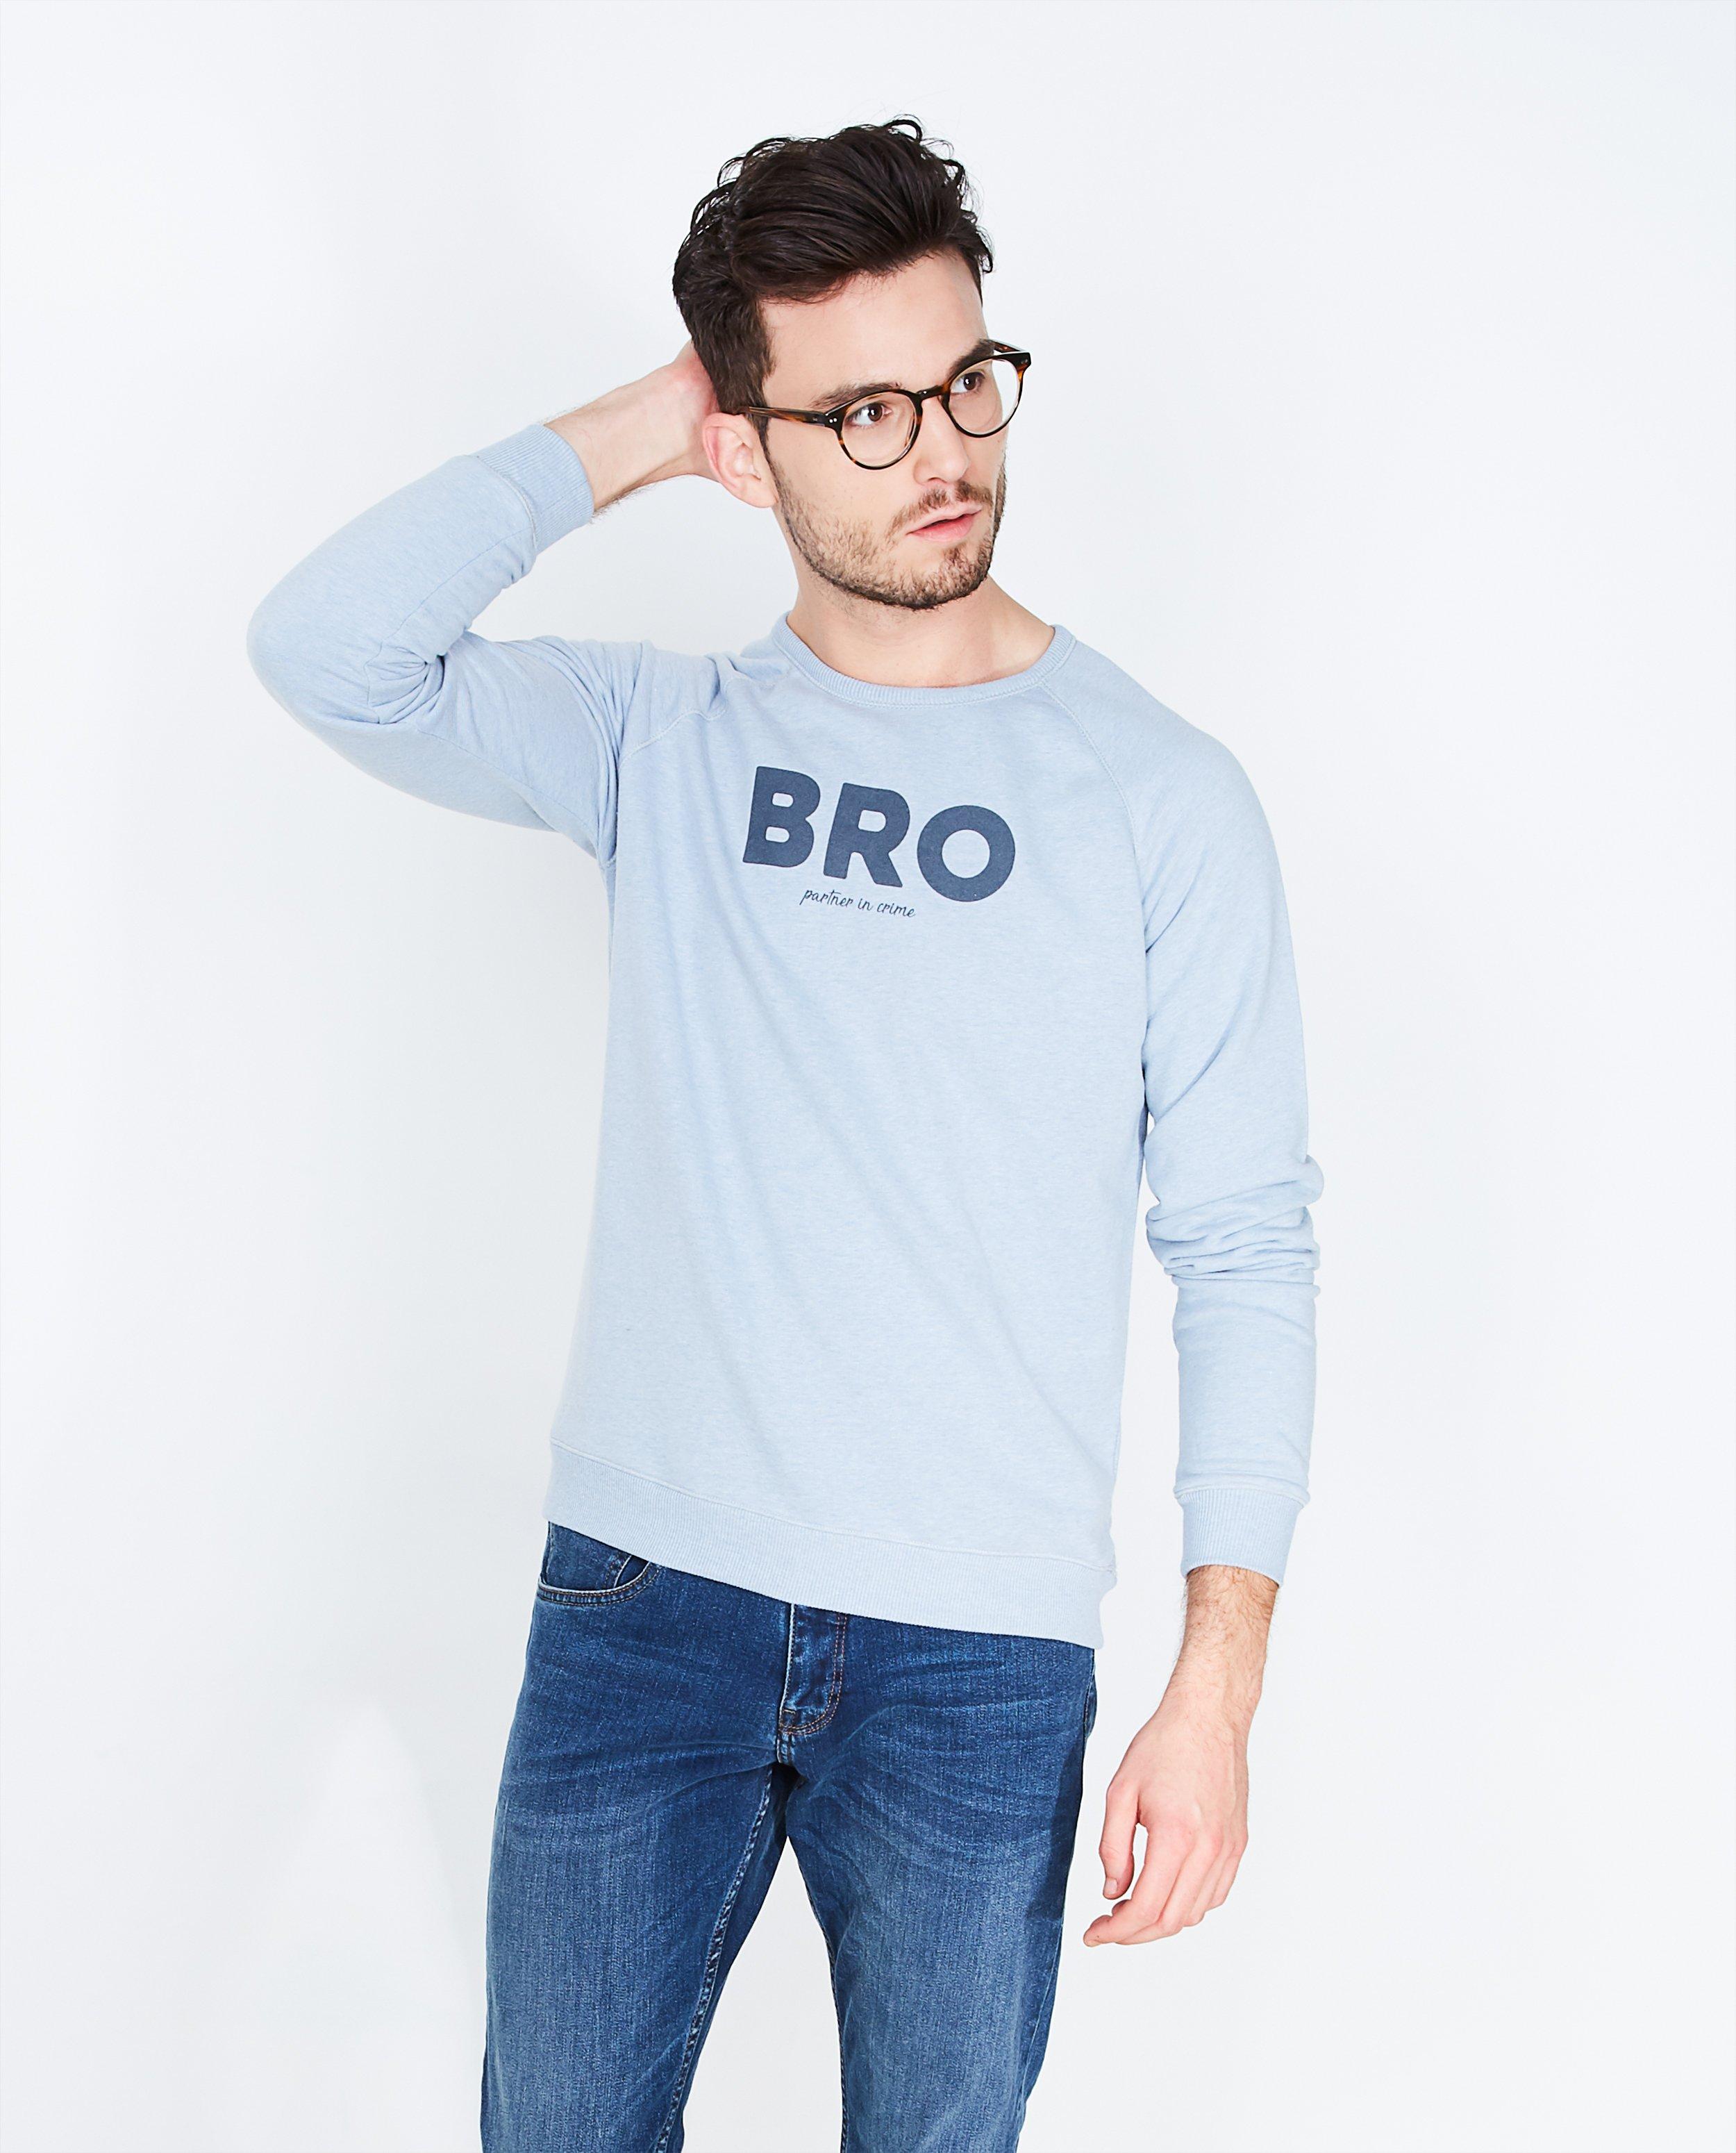 Hemelsblauwe sweater #familystoriesjbc - null - JBC